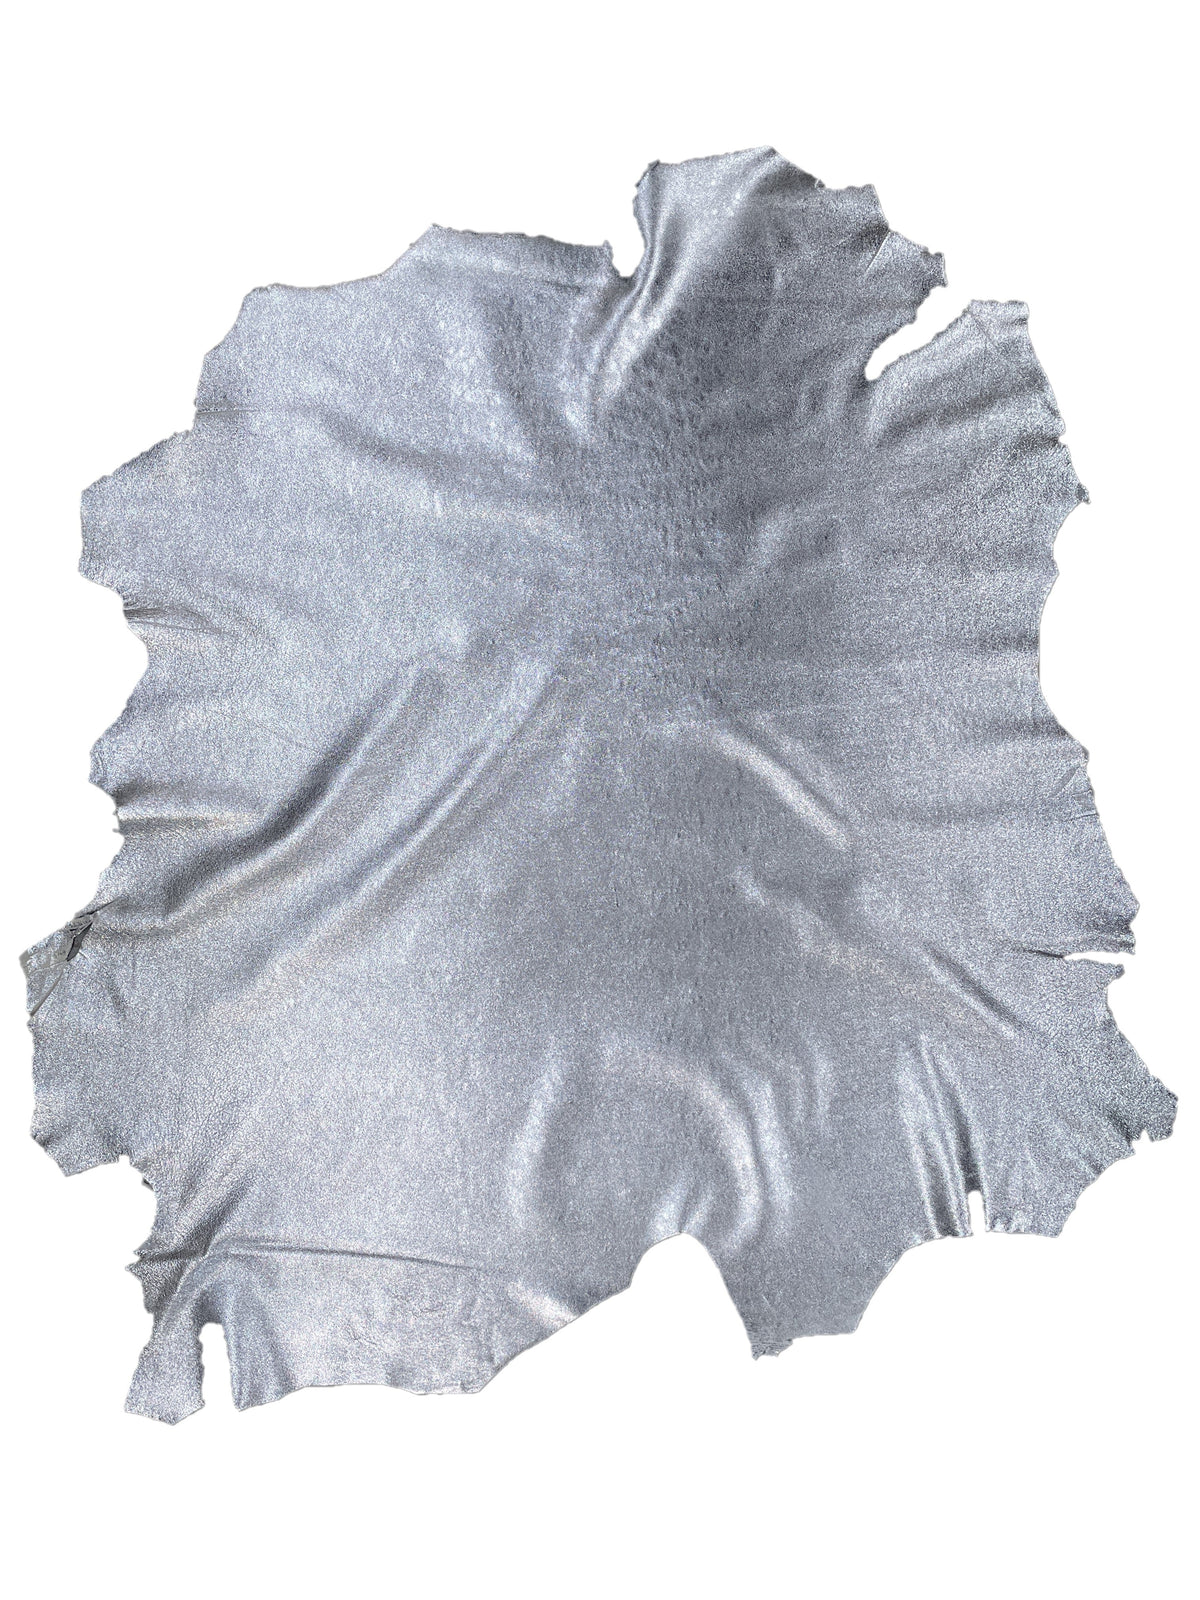 Lamb Skin | Metallic Silver Foil | 0.6mm | 7 sq.ft | $70 ea.